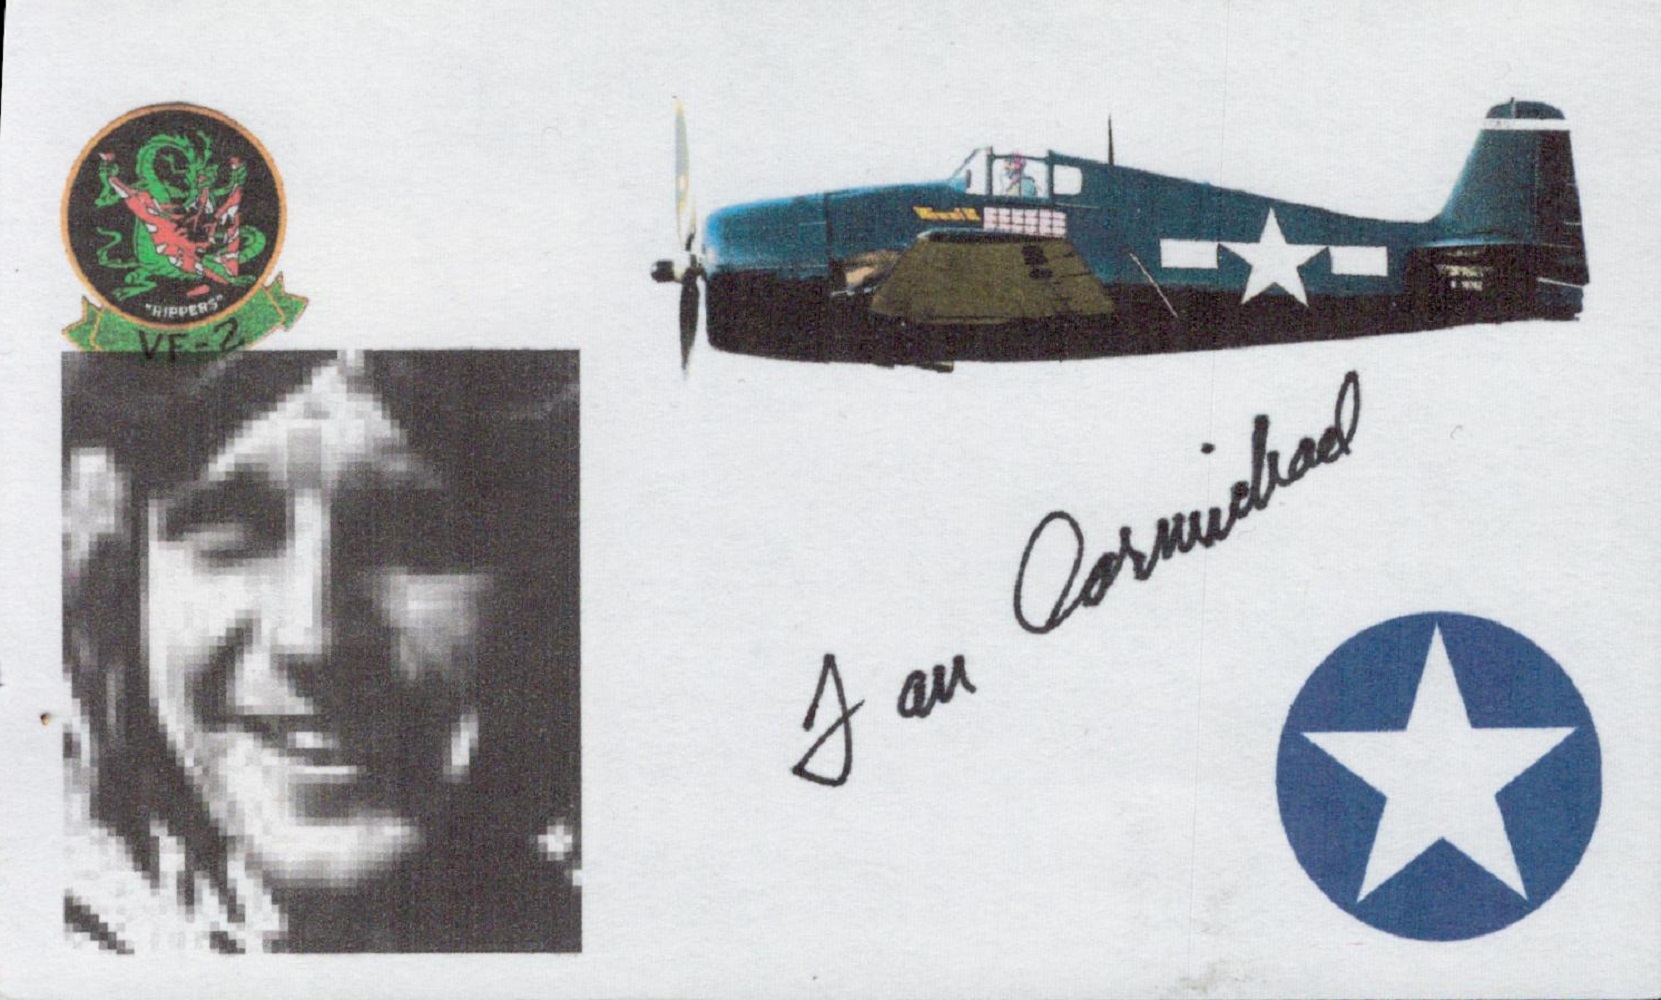 WWII Col Dan Carmichael US Fighter Ace signed 5x3 illustrated photo card. Dan Carmichael was born on